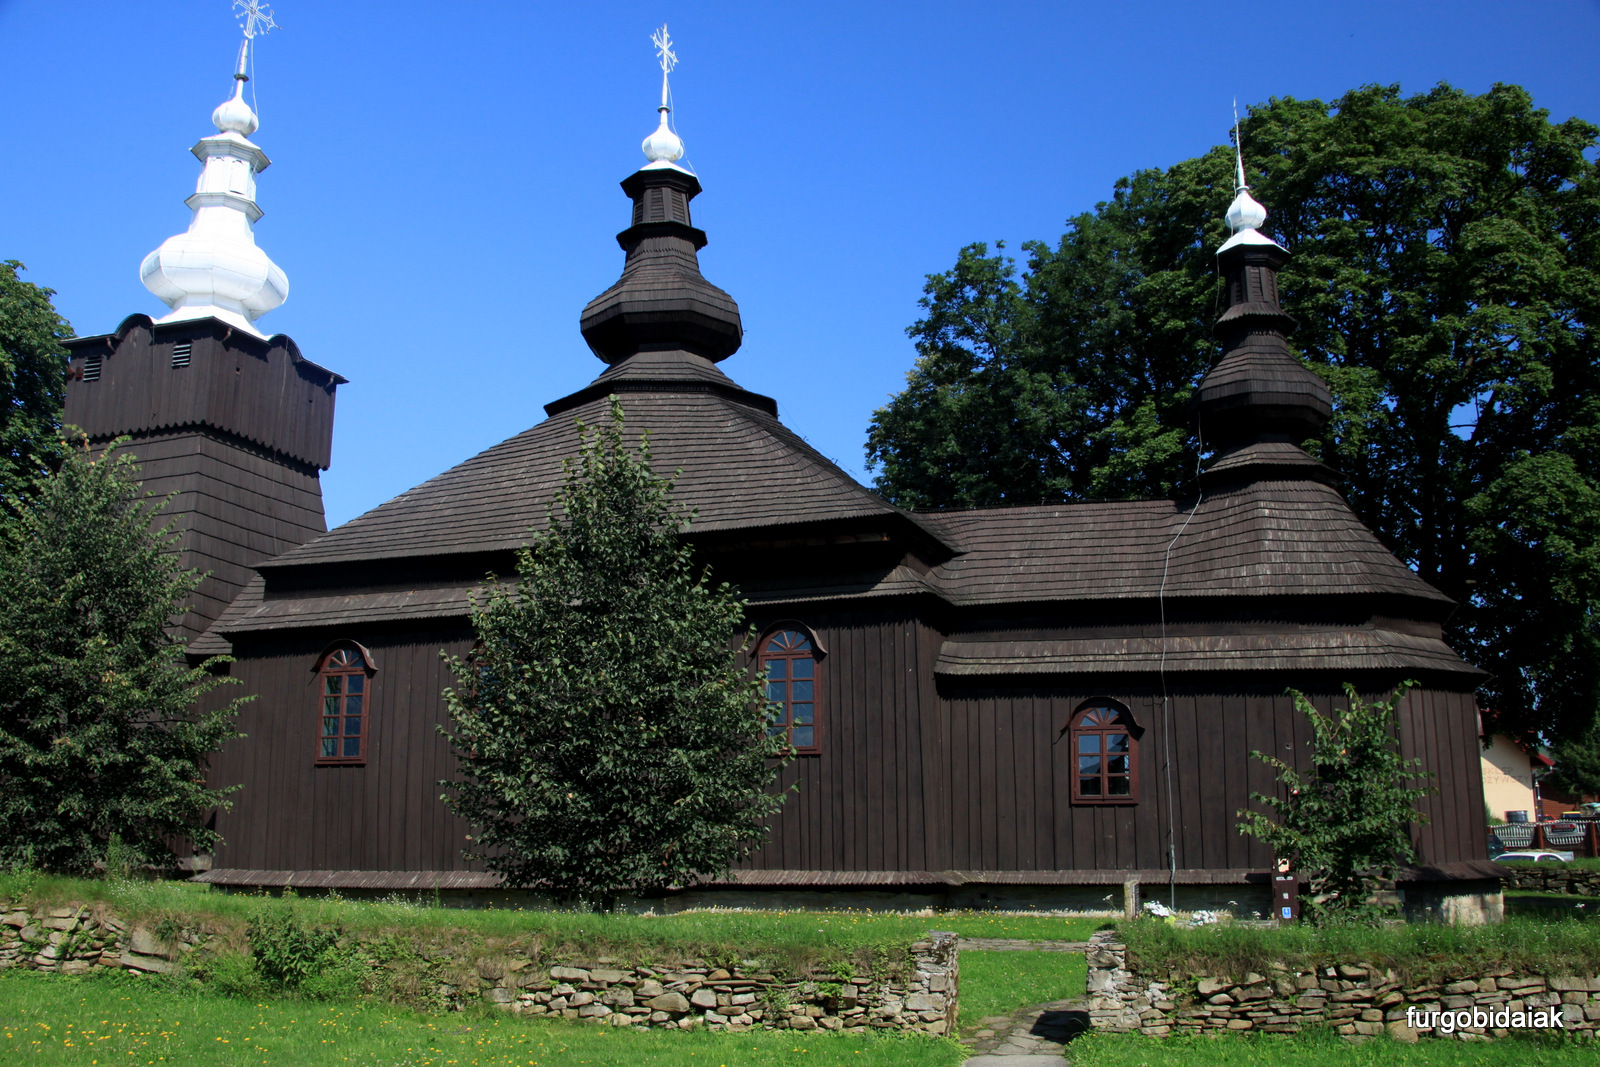 Cerkiew San Miguel Arcángel, Brunary, Polonia